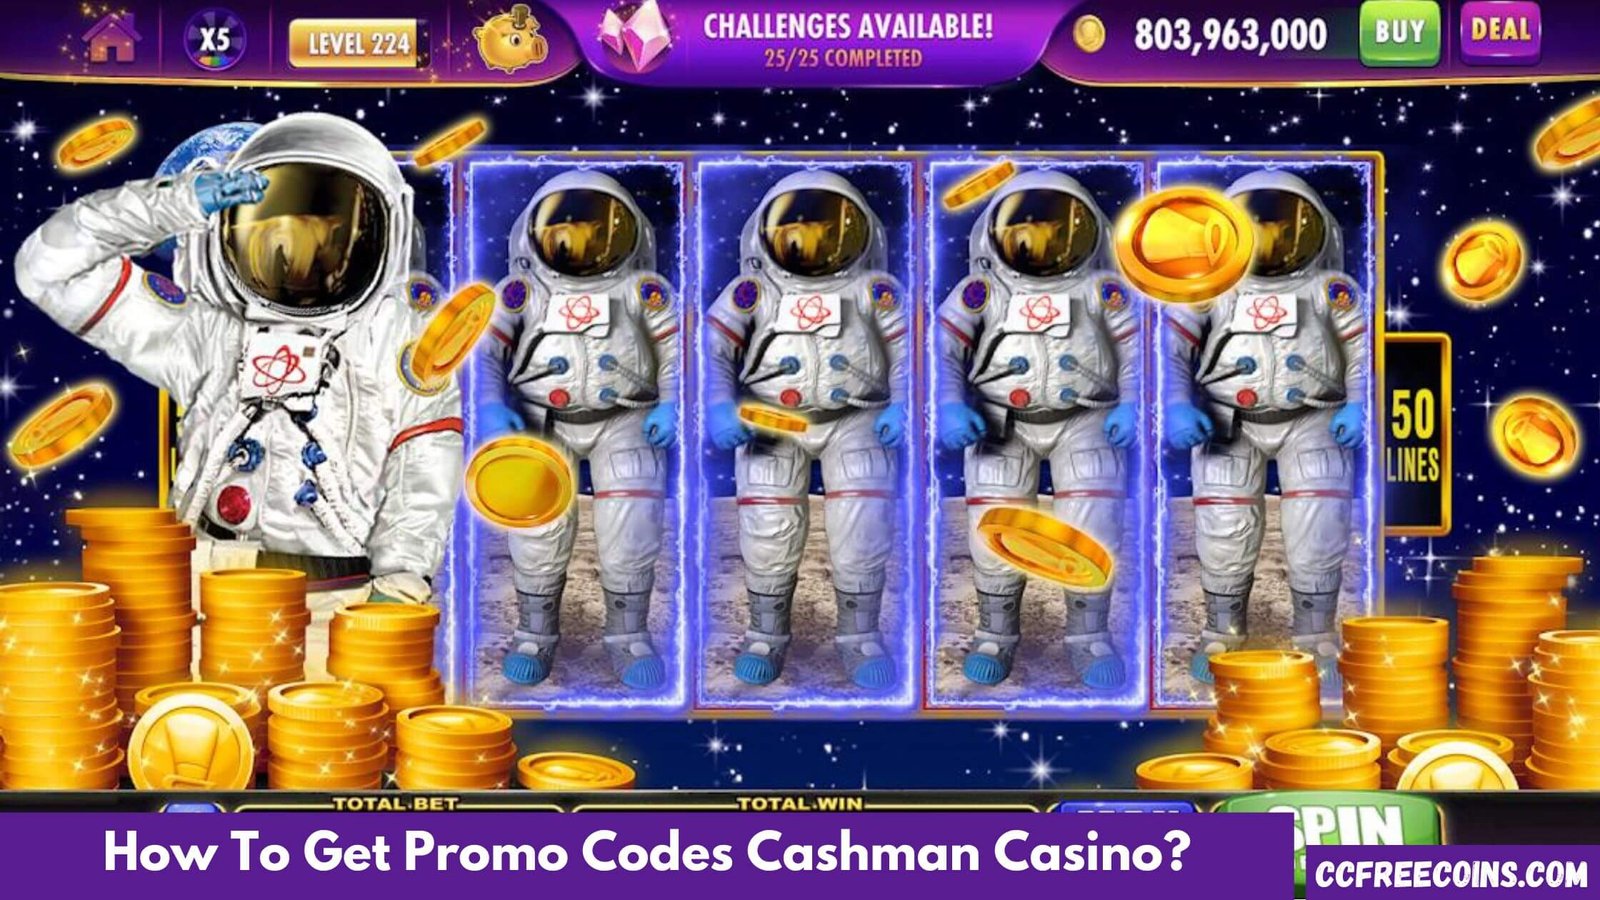 How To Get Promo Codes Cashman Casino?